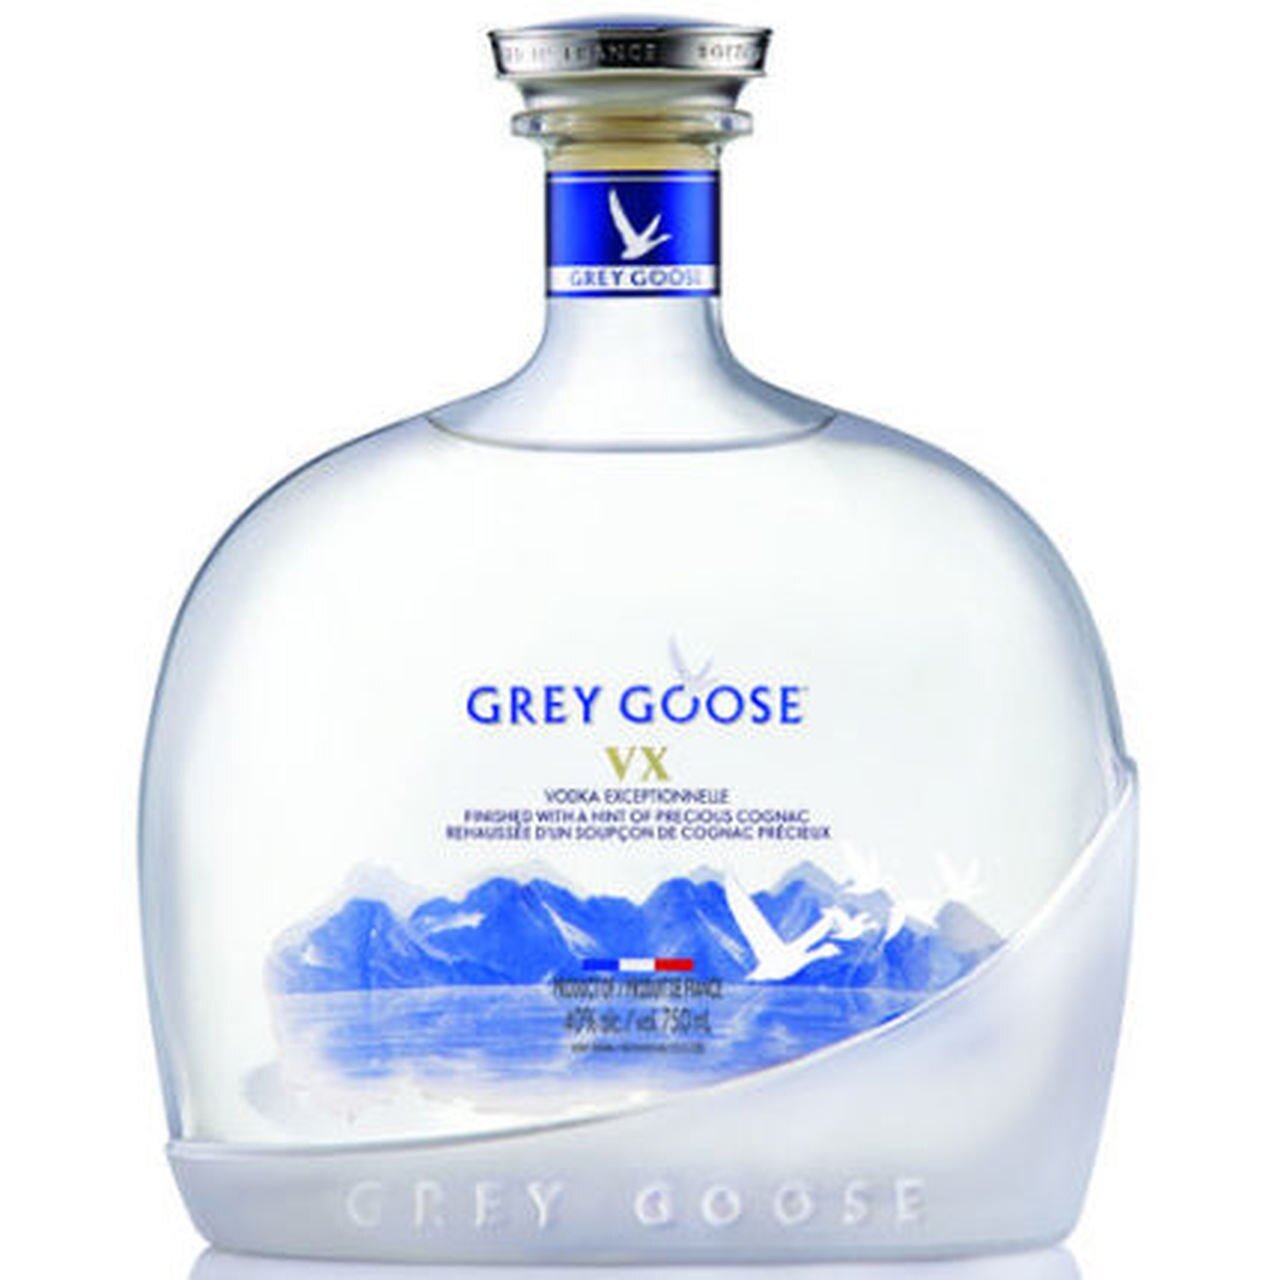 Grey Goose VX Vodka Exceptionnelle 750ml